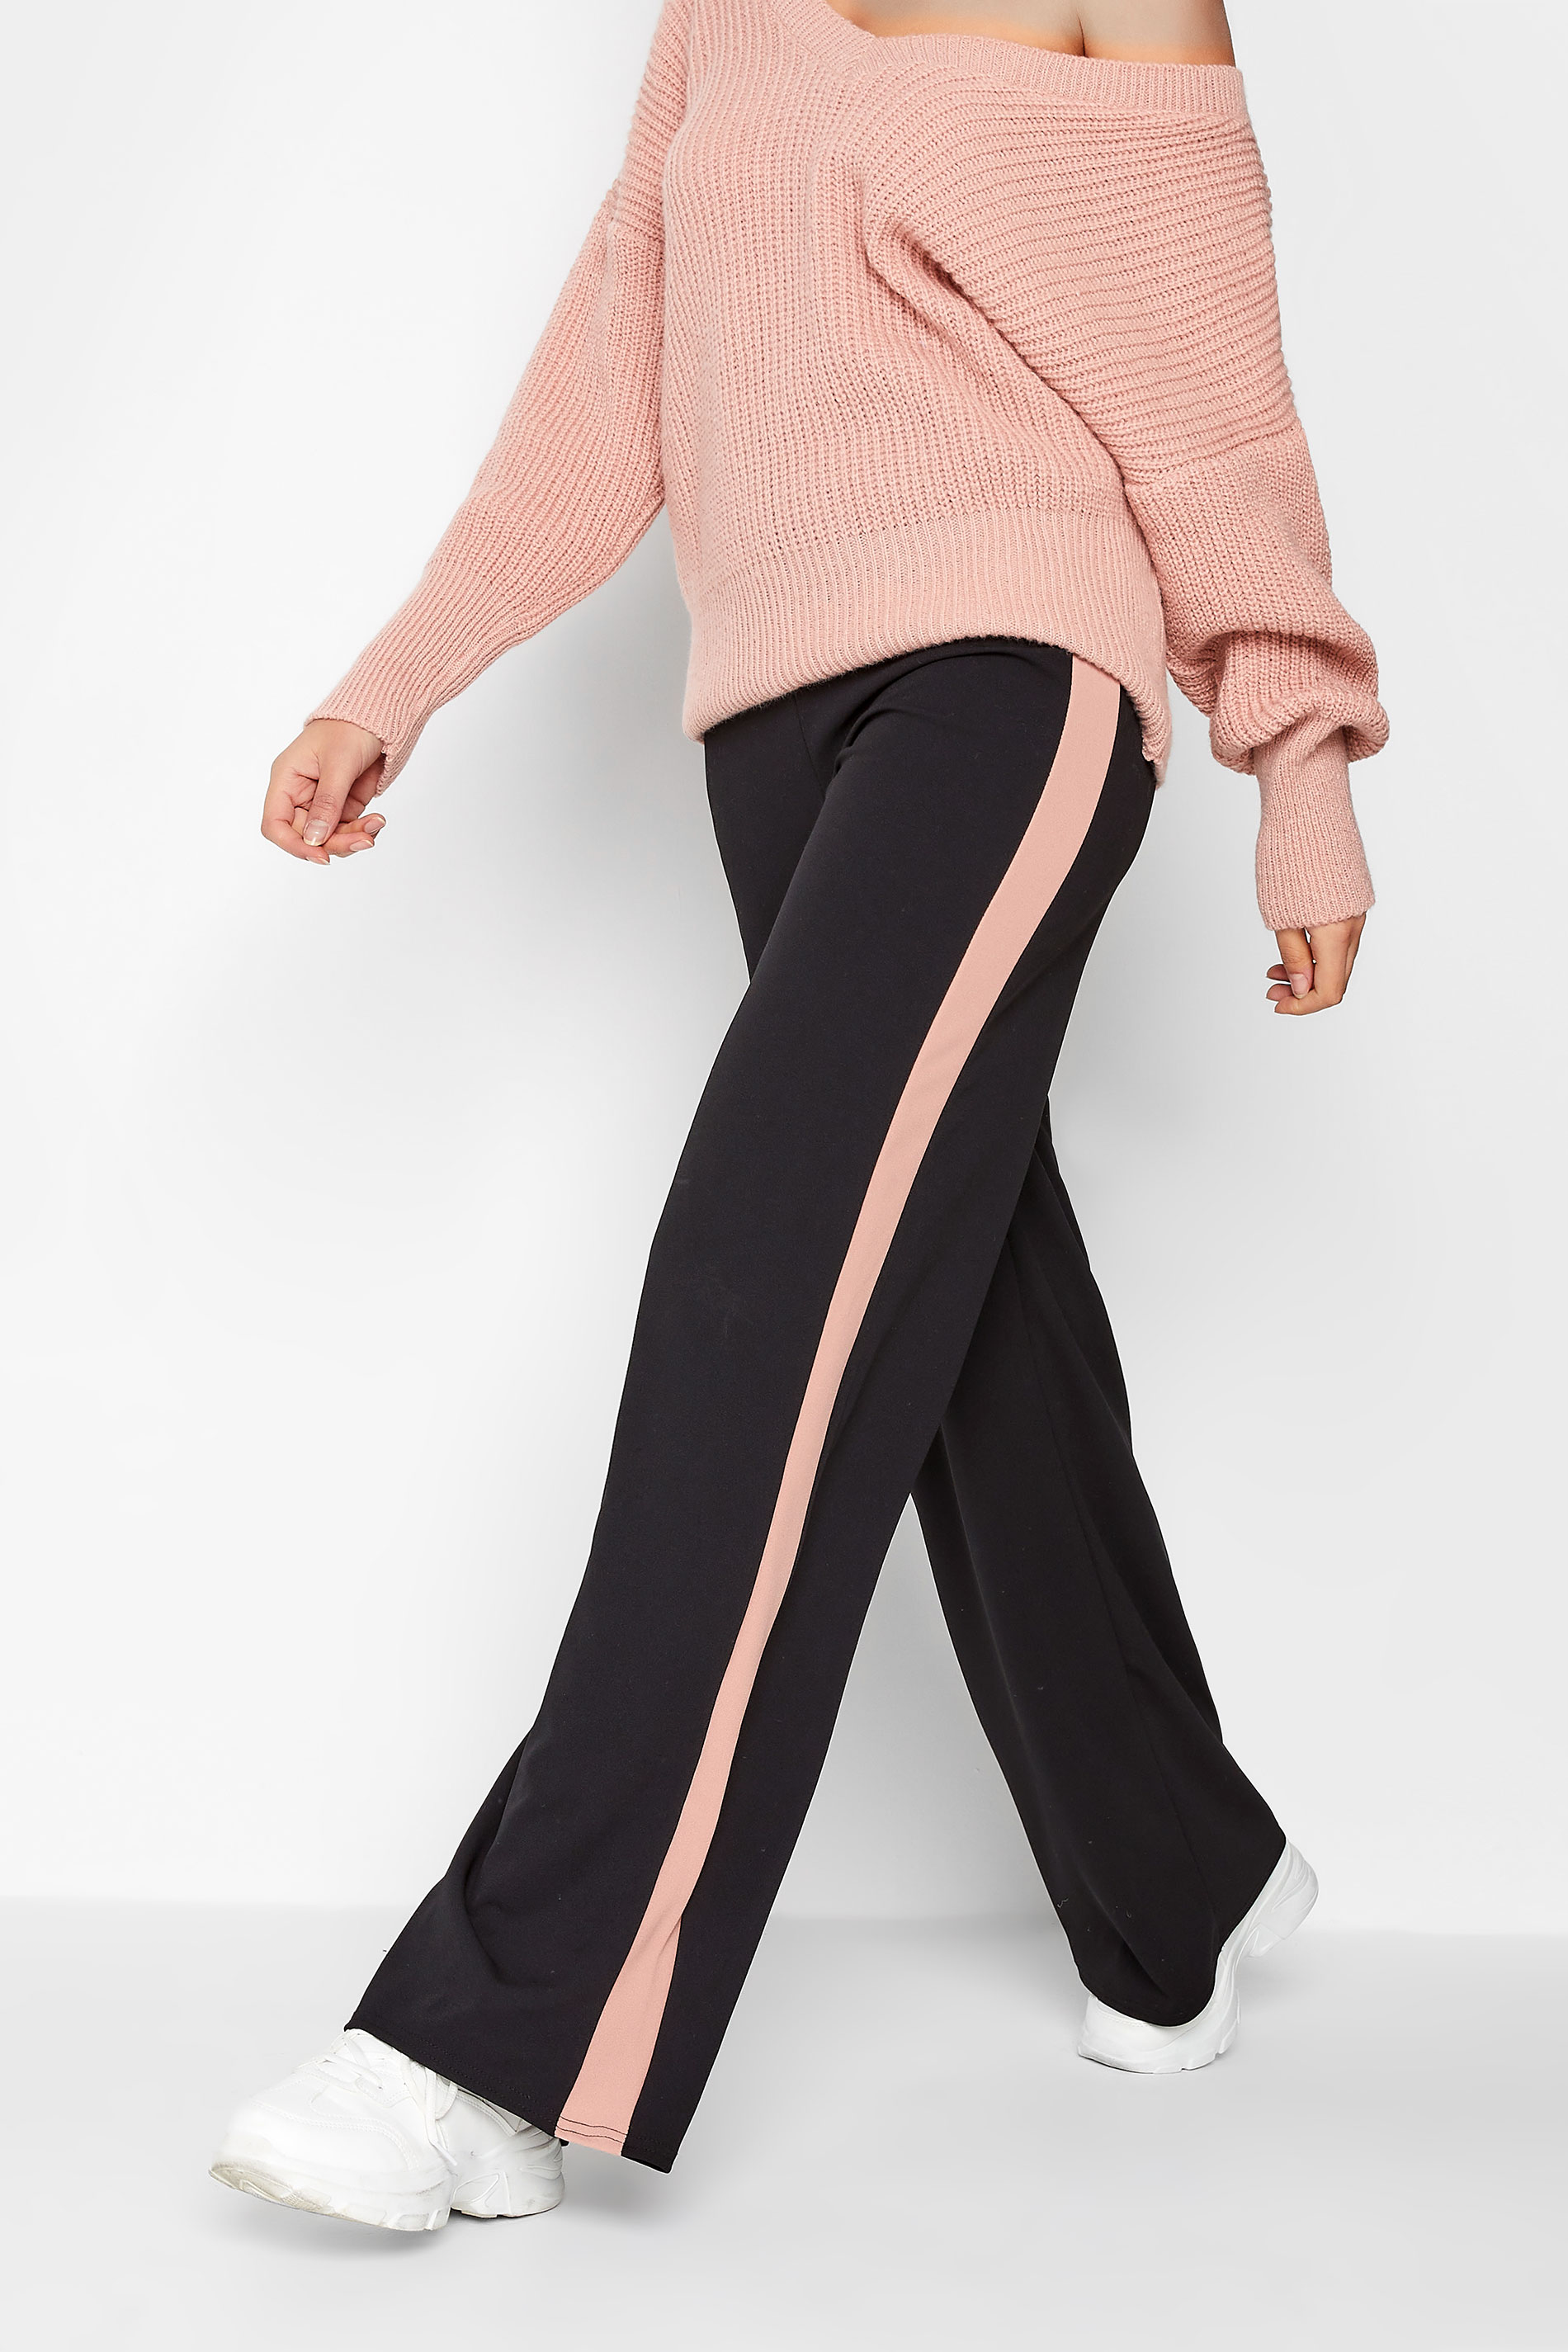 LTS Tall Women's Black Side Stripe Trousers | Long Tall Sally 1